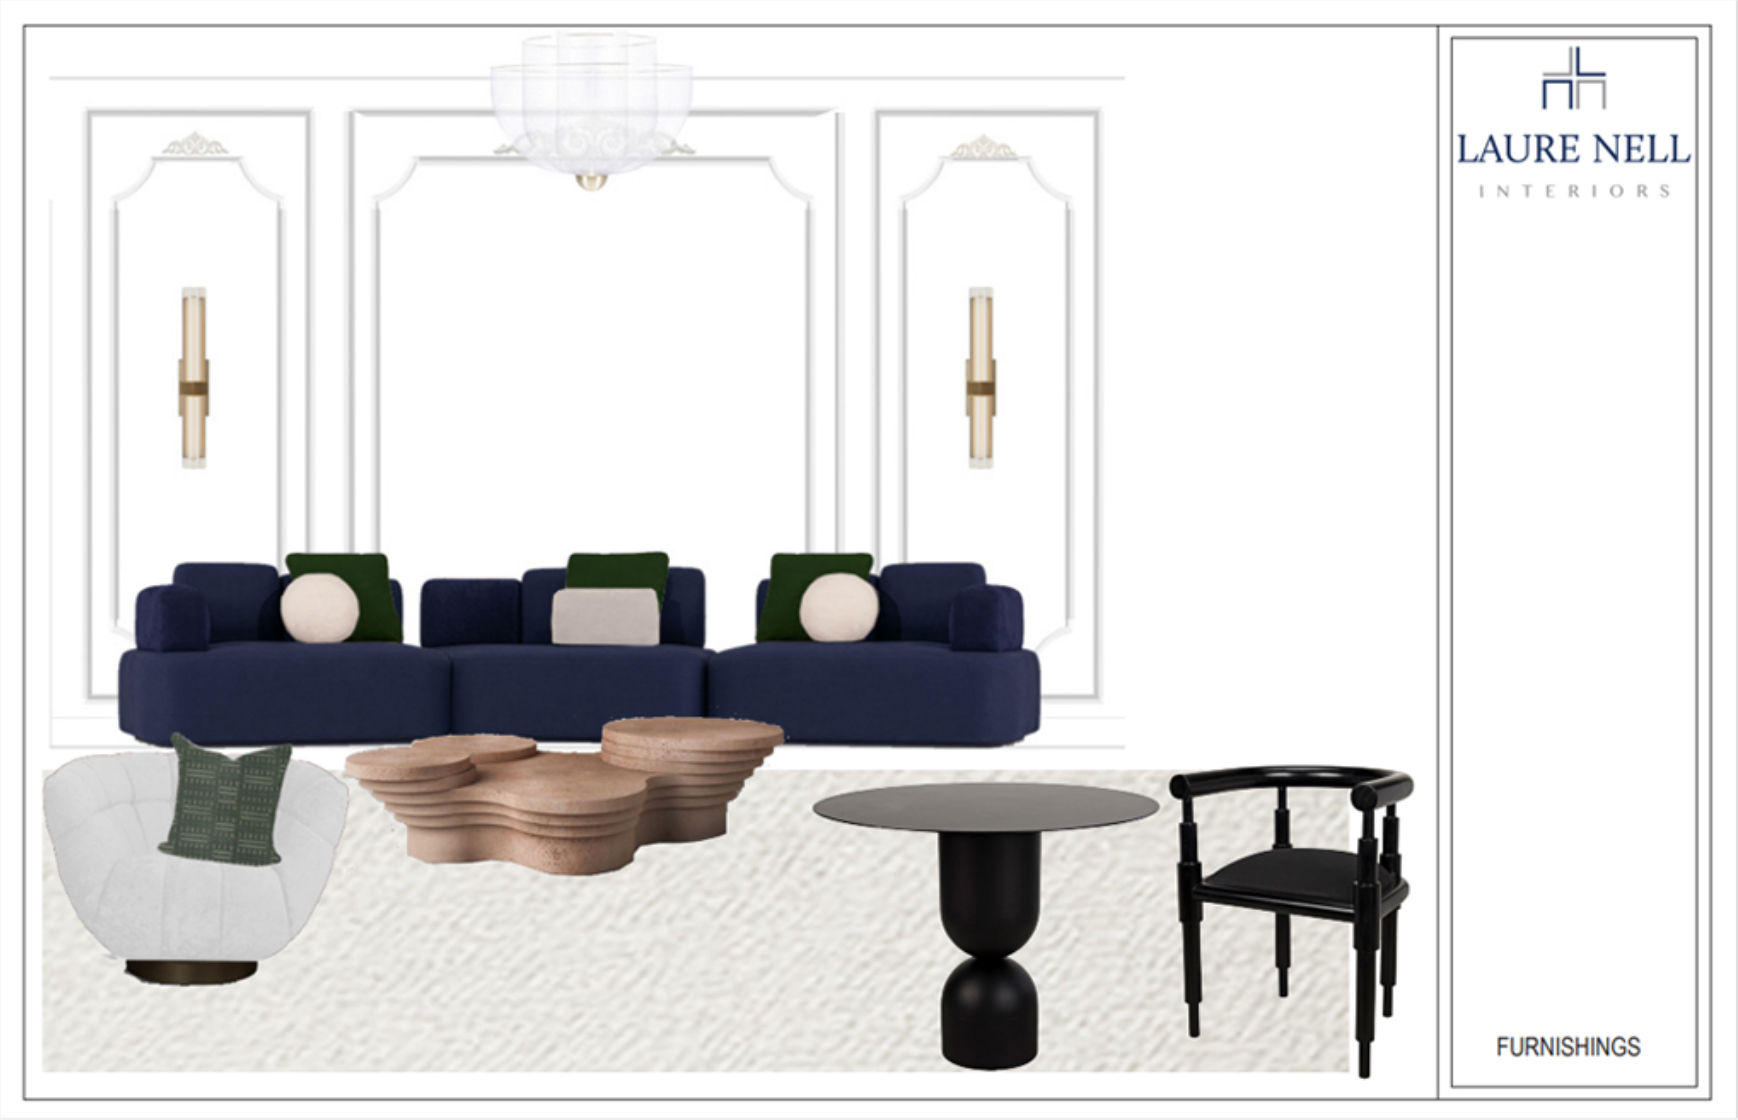 Furniture selection, interior design